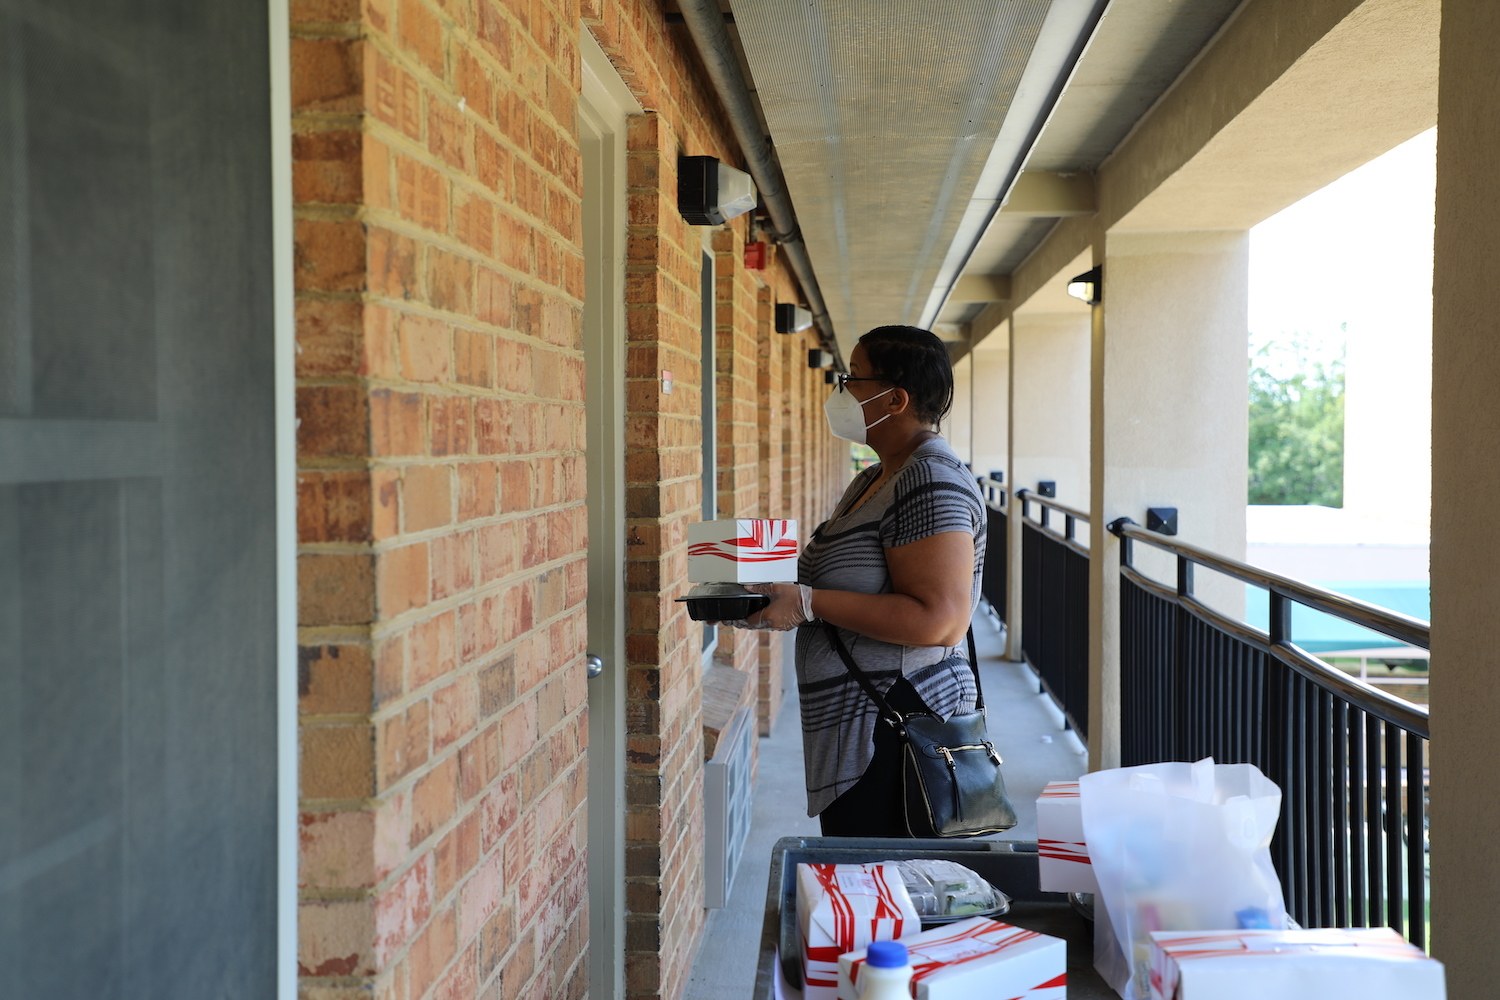 delivering dining hall meals door to door at NC State University August 2020